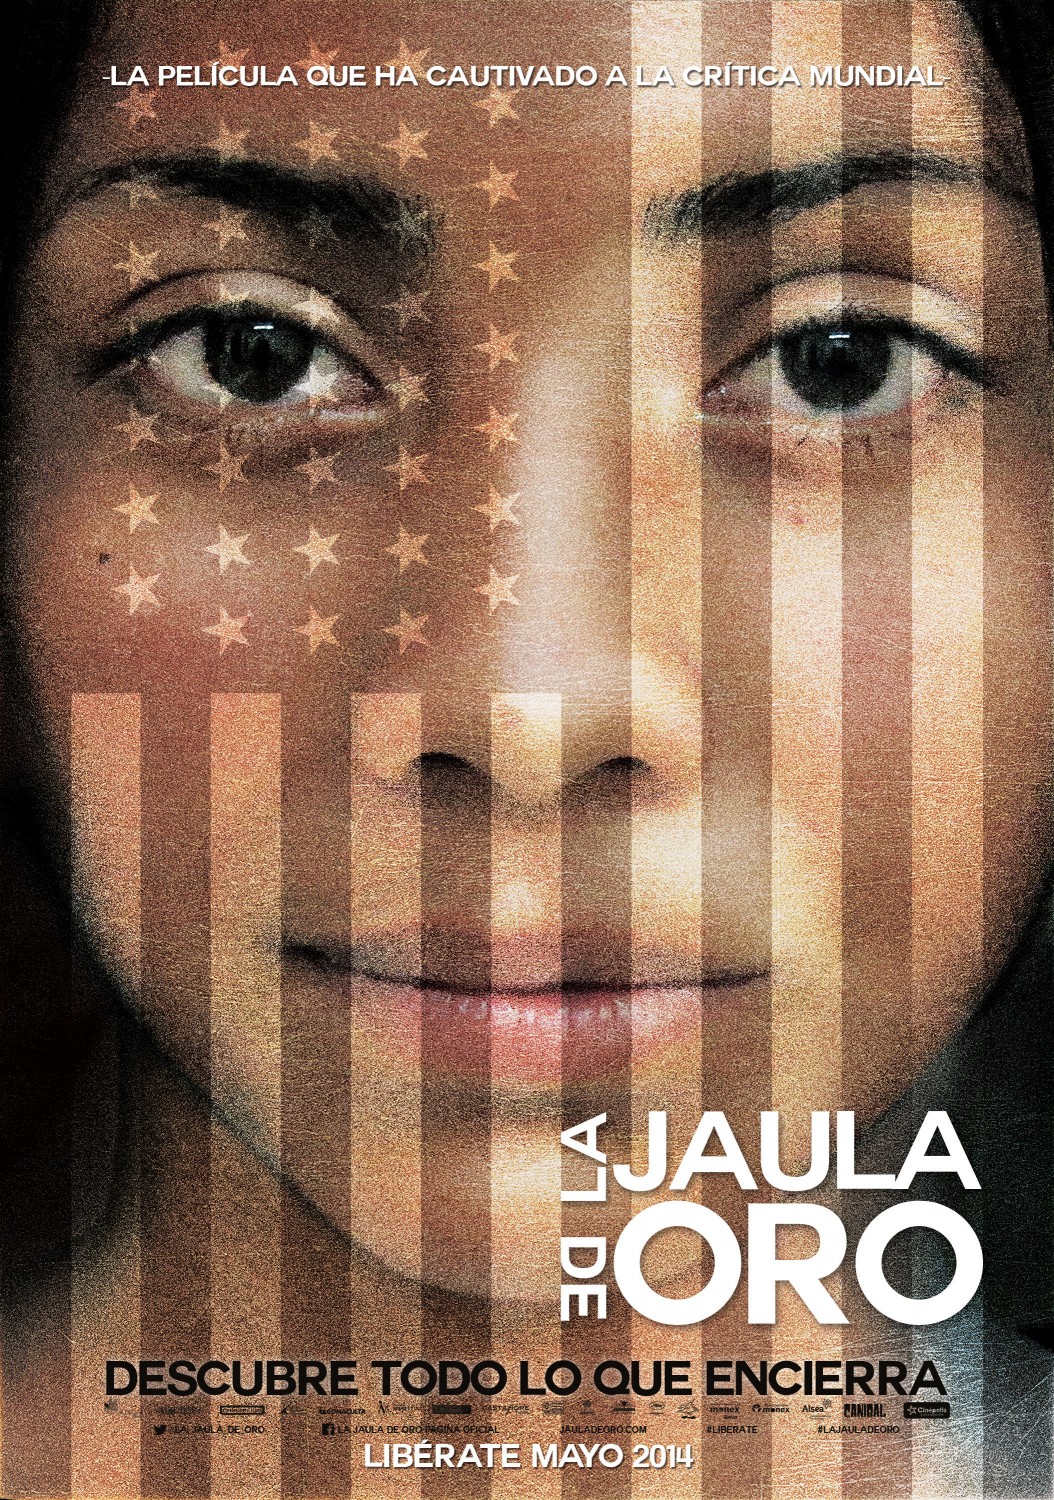 Extra Large Movie Poster Image for La jaula de oro (#3 of 8)